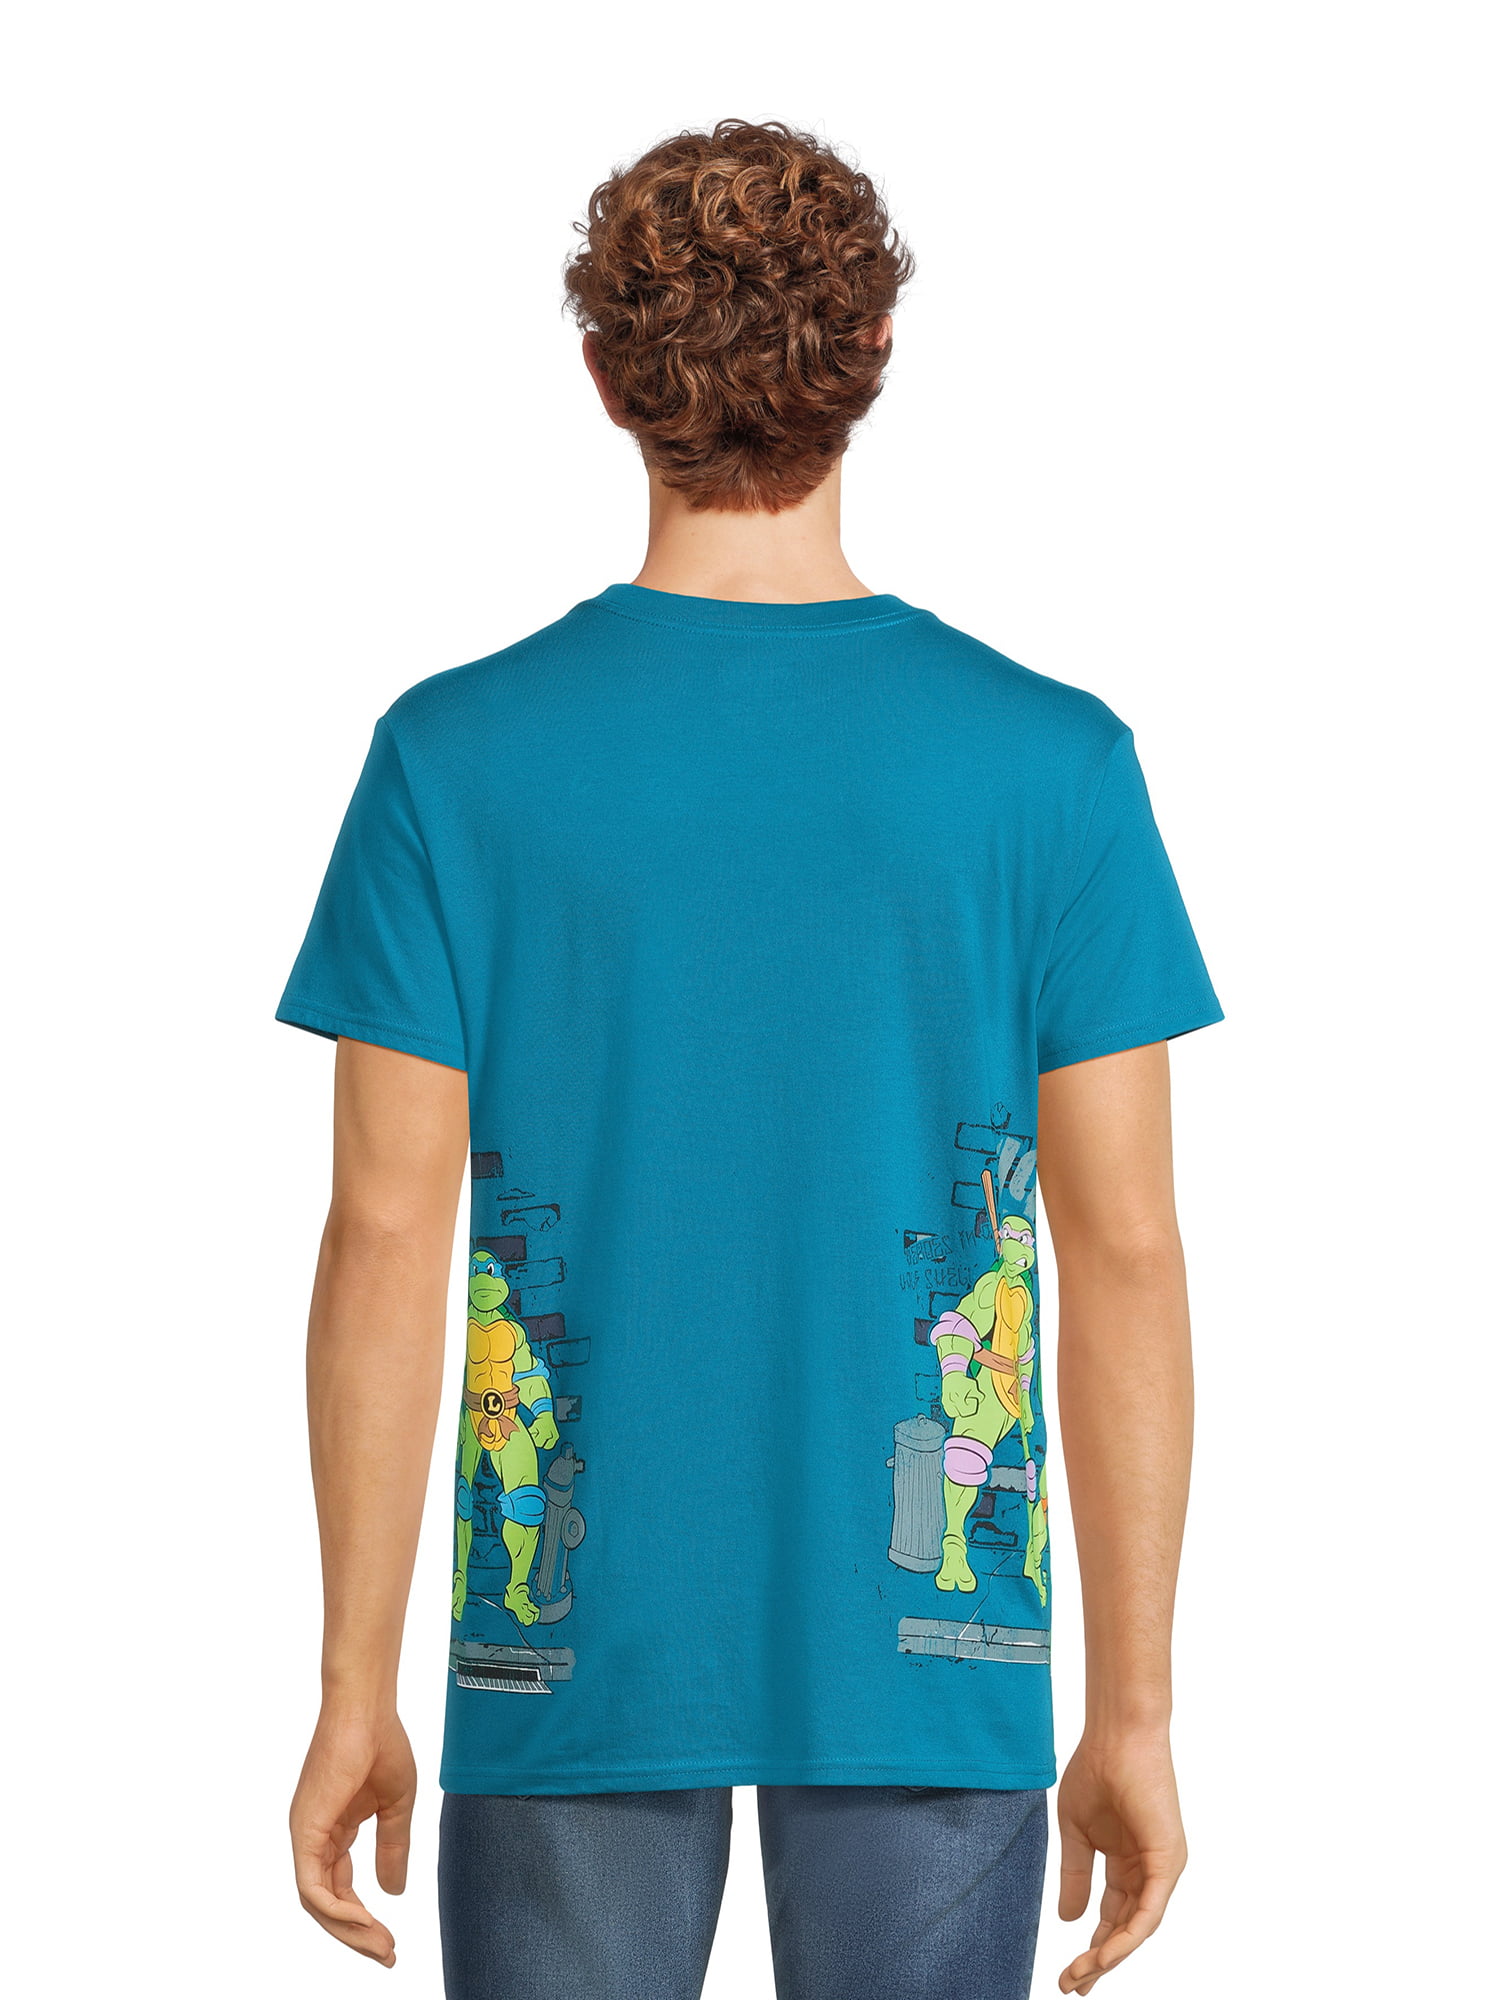 Teenage Mutant Ninja Turtles Donatello Does Machines T-Shirt 3XL / Light Blue